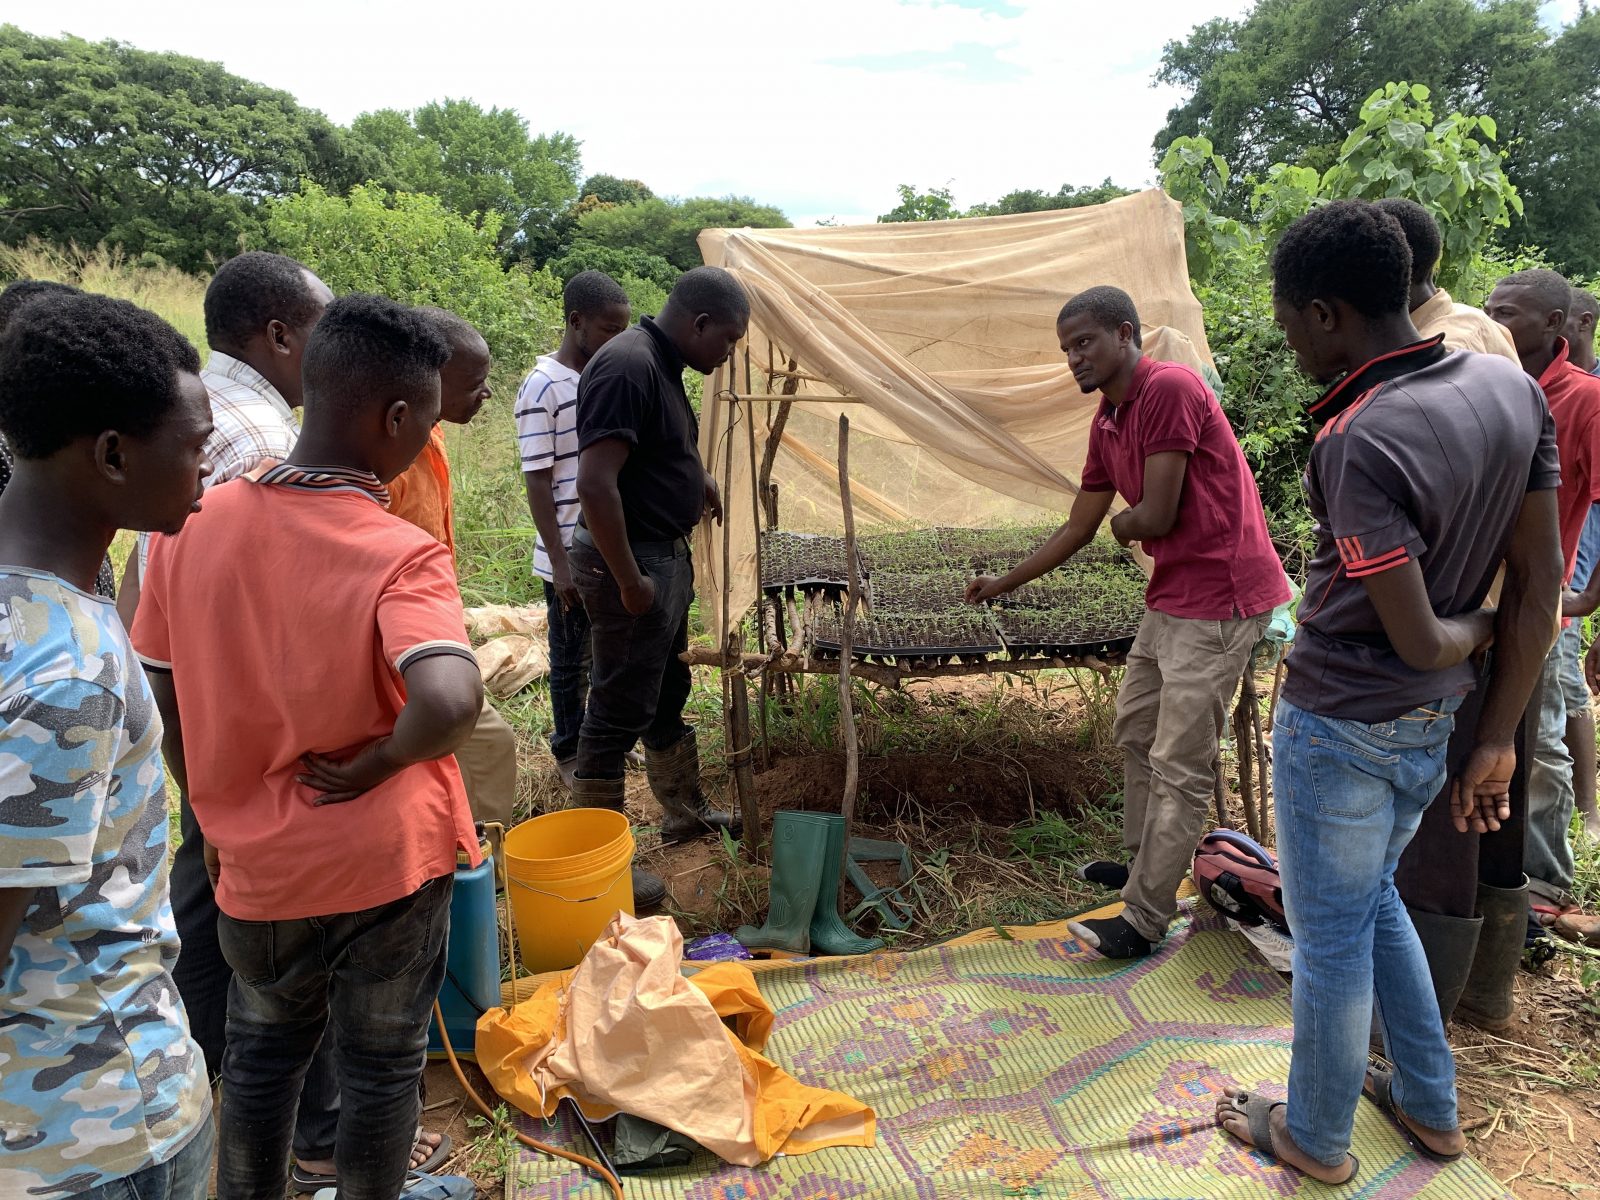 Tanzania men in seedling farm